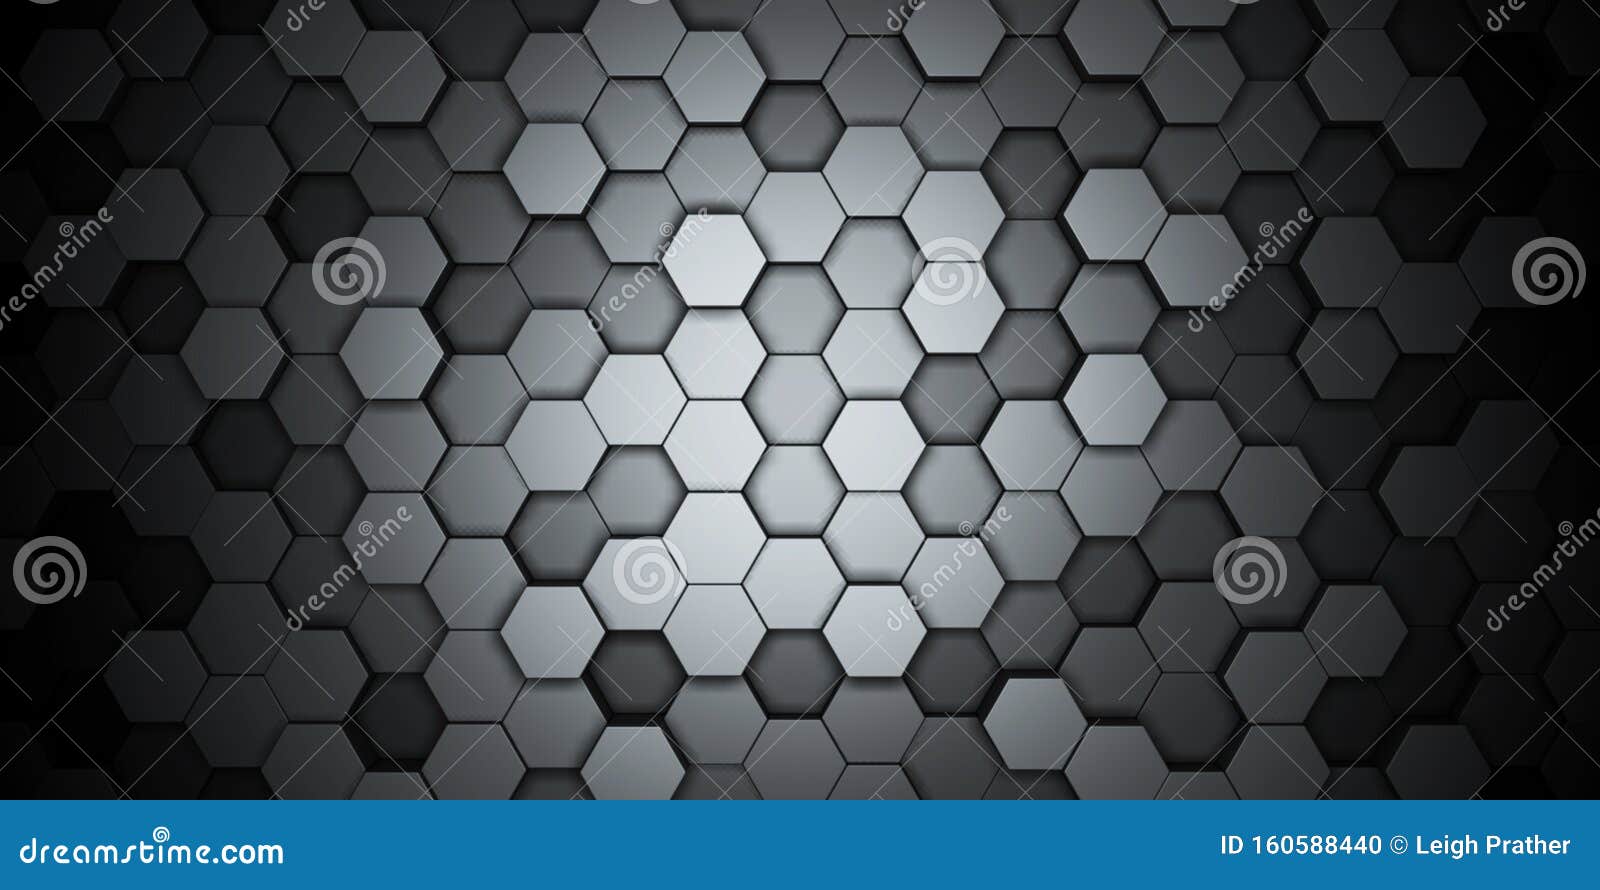 Hexagon phone wallpaper 1080P 2k 4k Full HD Wallpapers Backgrounds Free  Download  Wallpaper Crafter